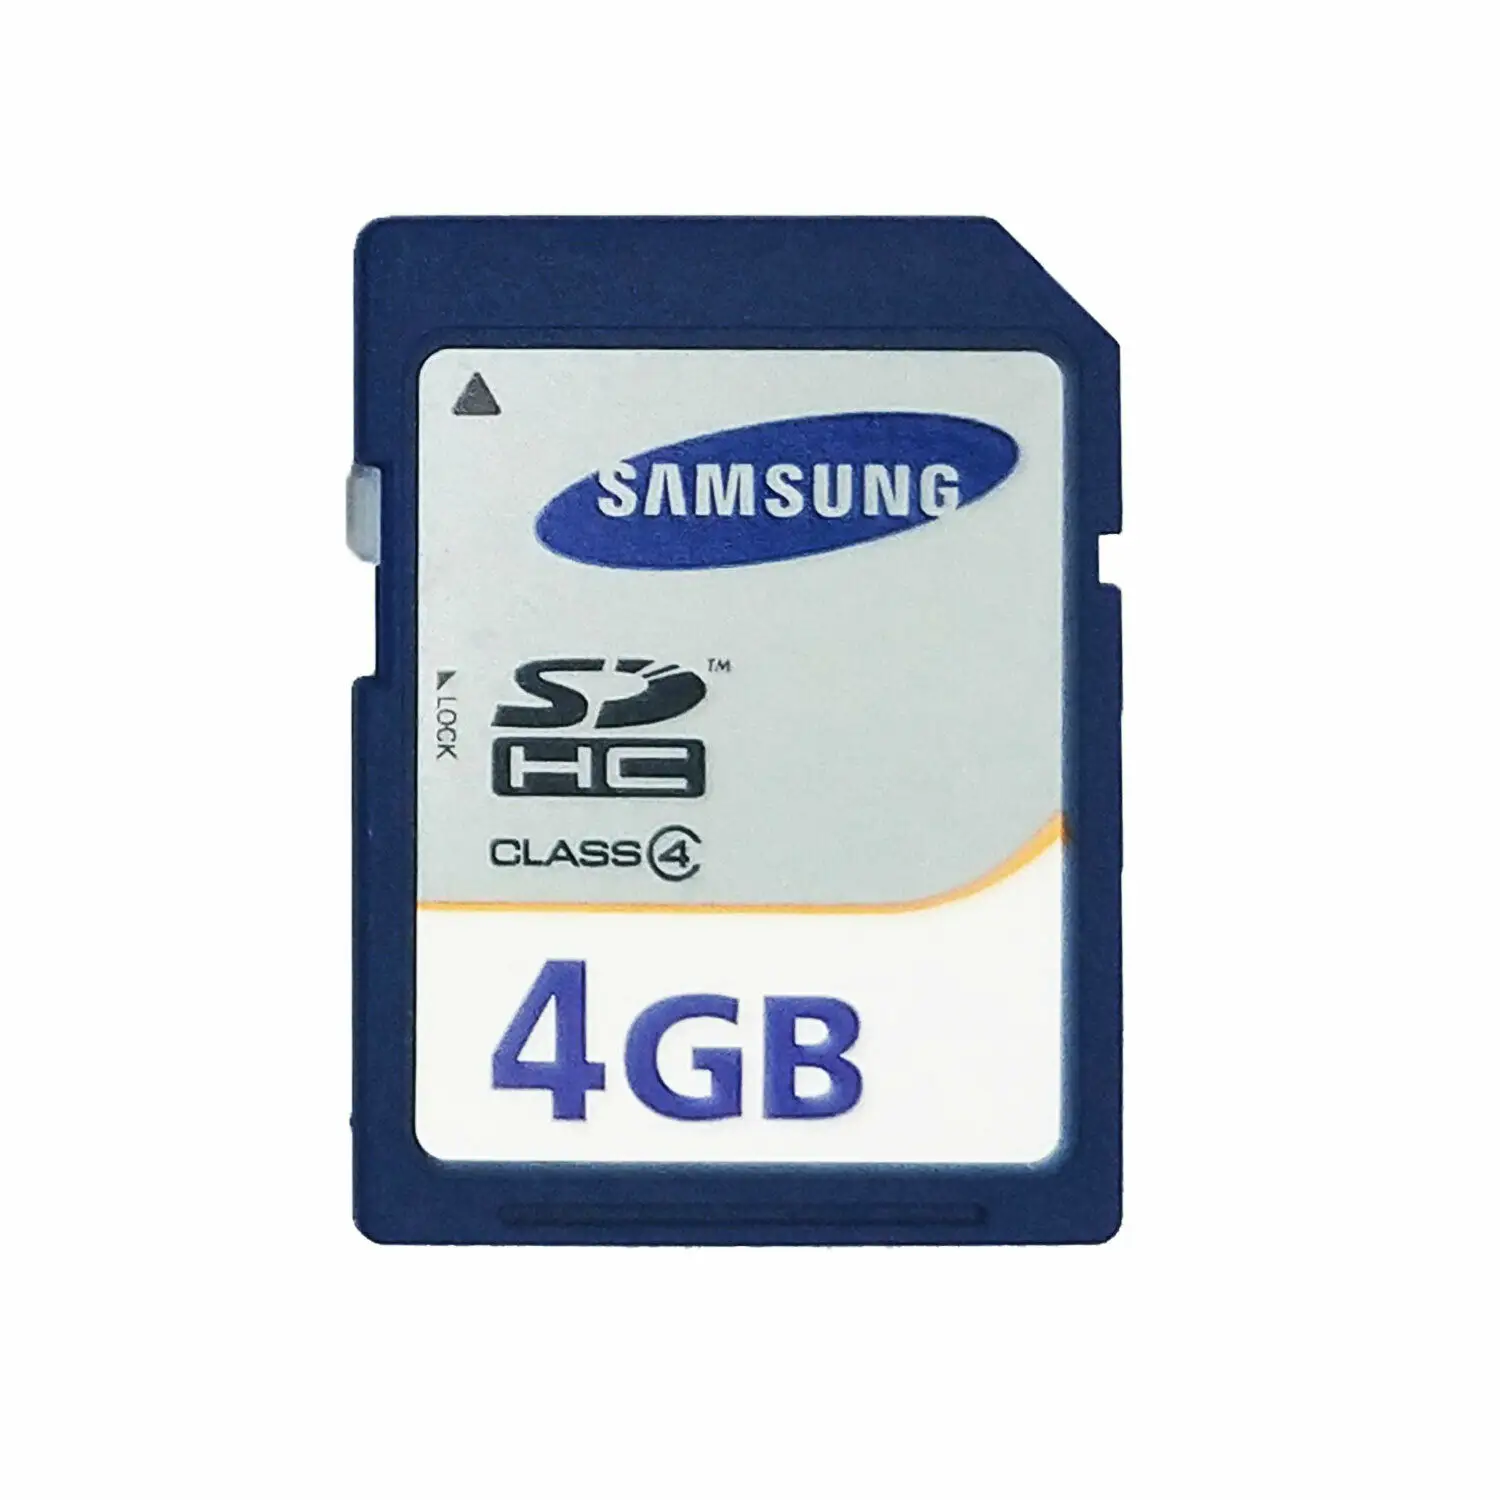 SD Card Memory Card Blue 4GB Secure Digital 4GB Class 4 Camera A SD Card UPC 0023942961710